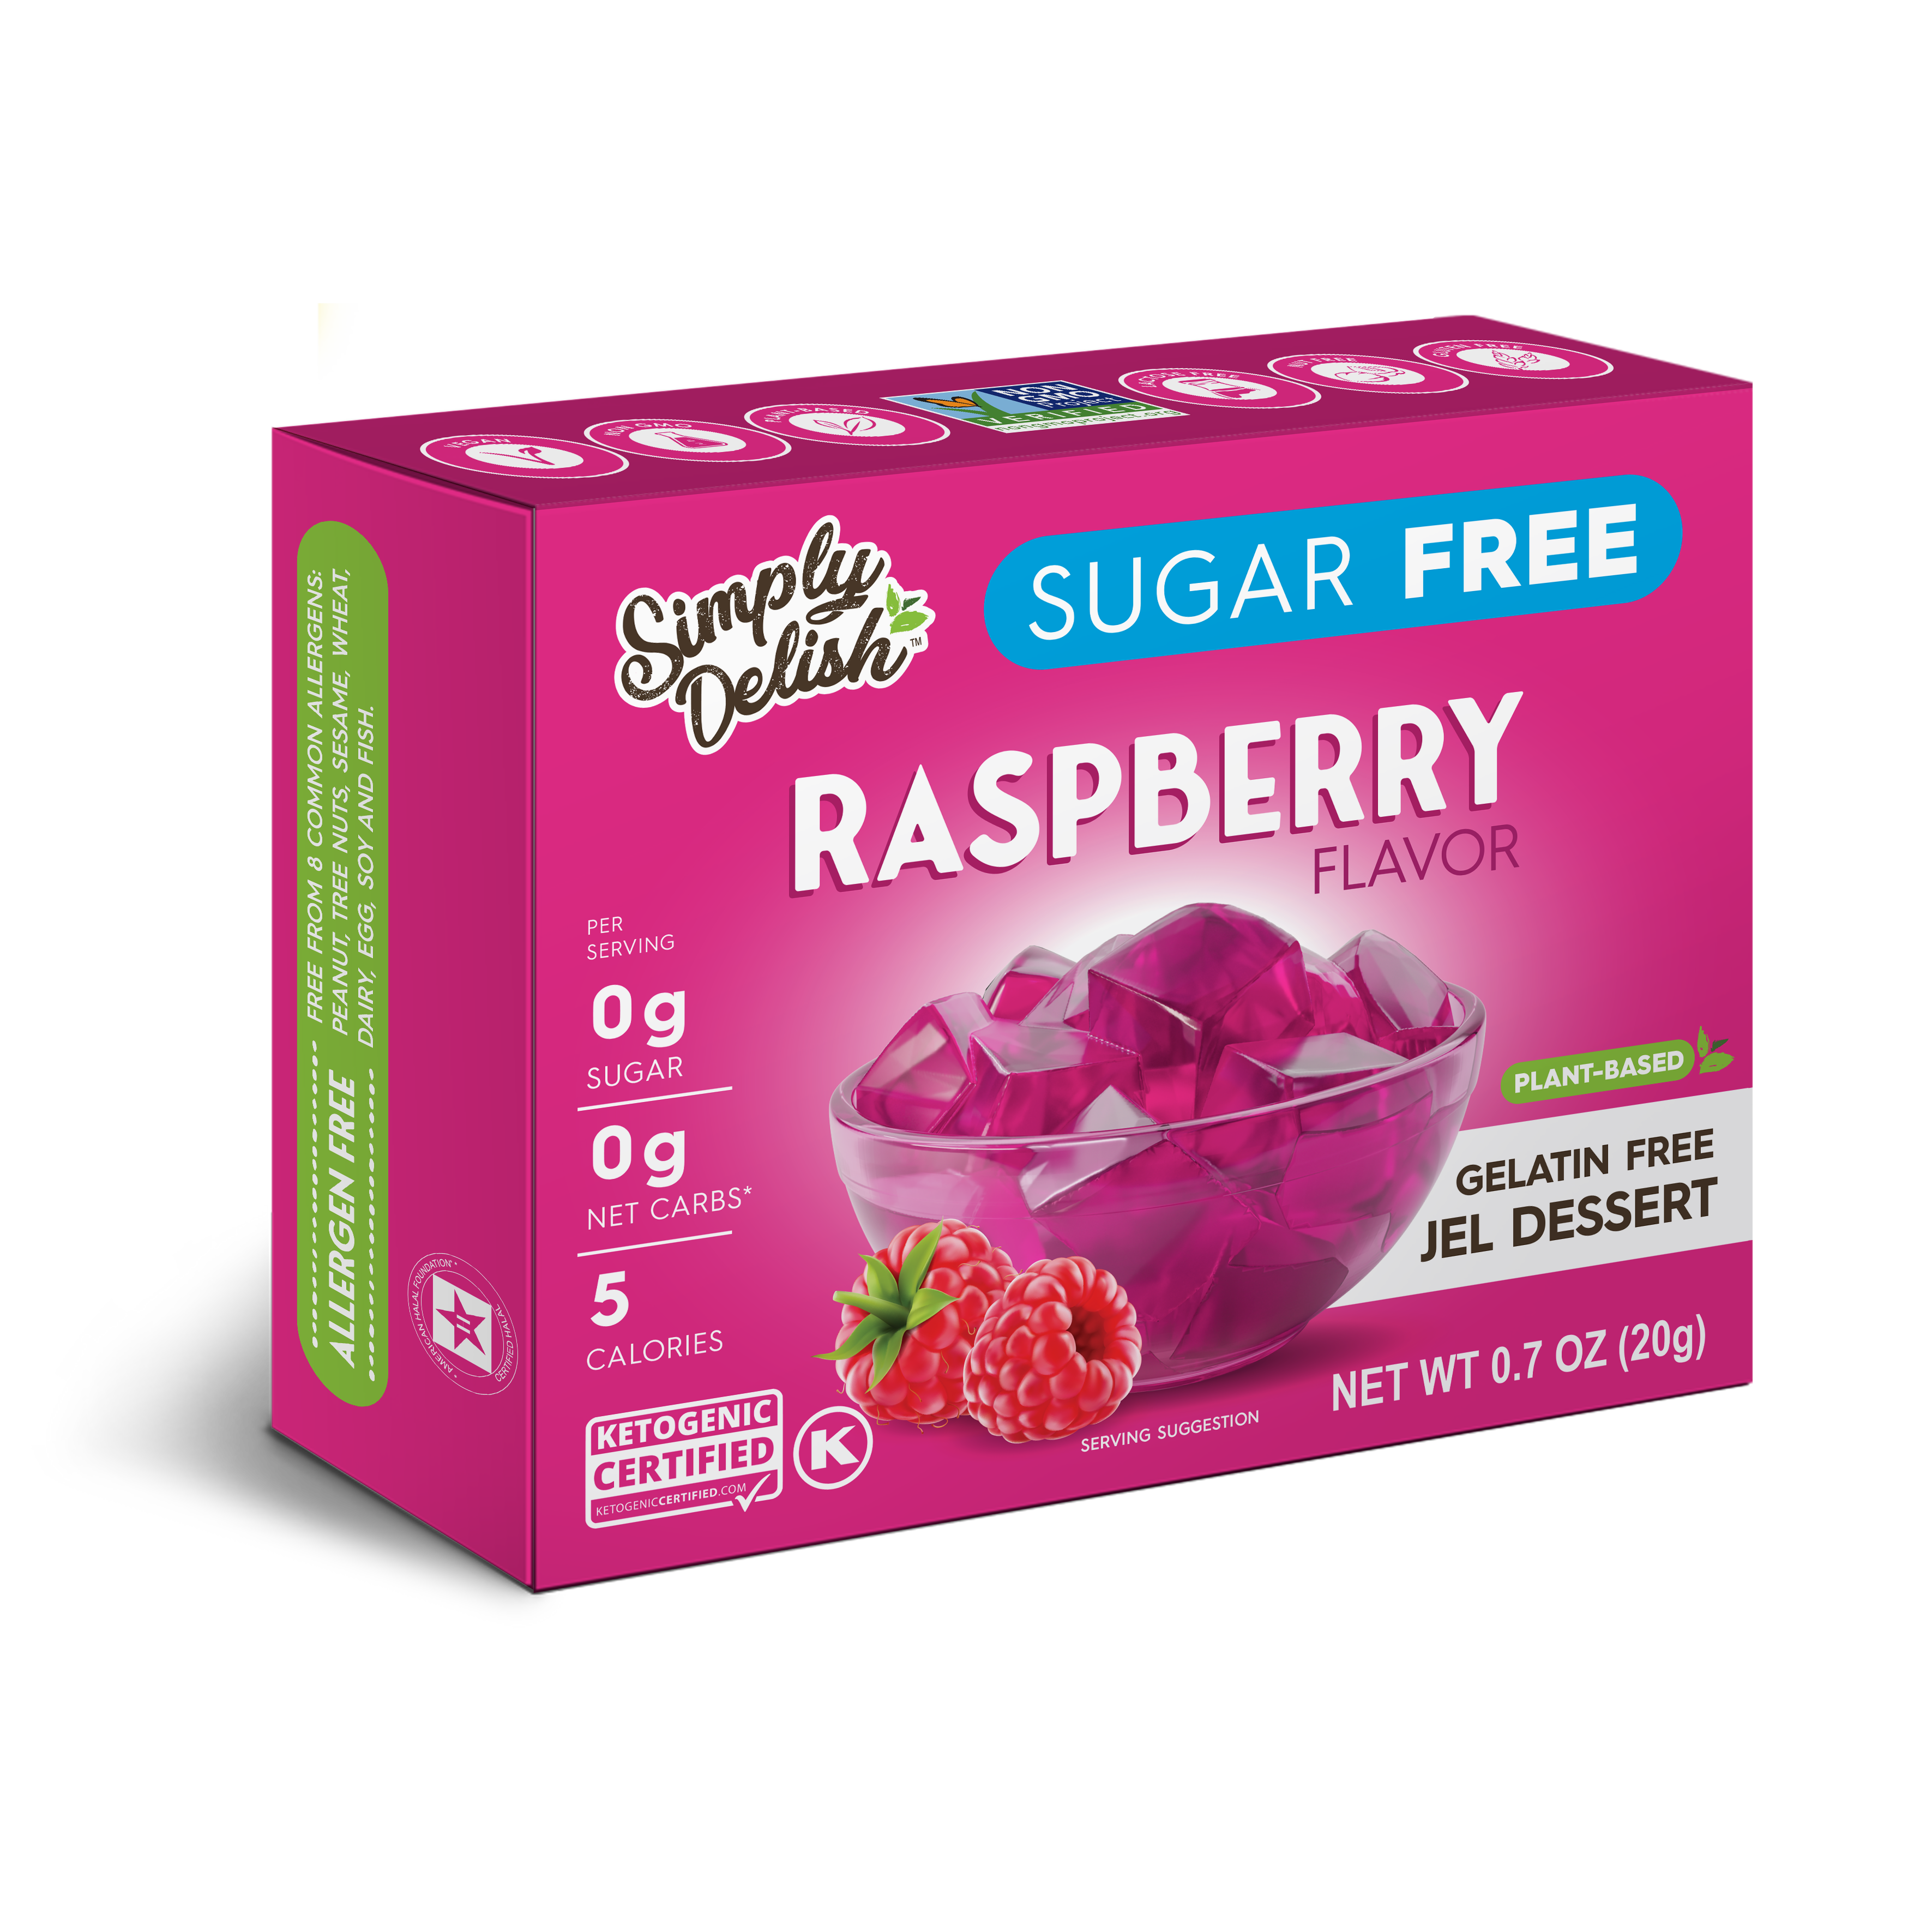 #Flavor_Raspberry (0.7oz) #Size_1-Pack